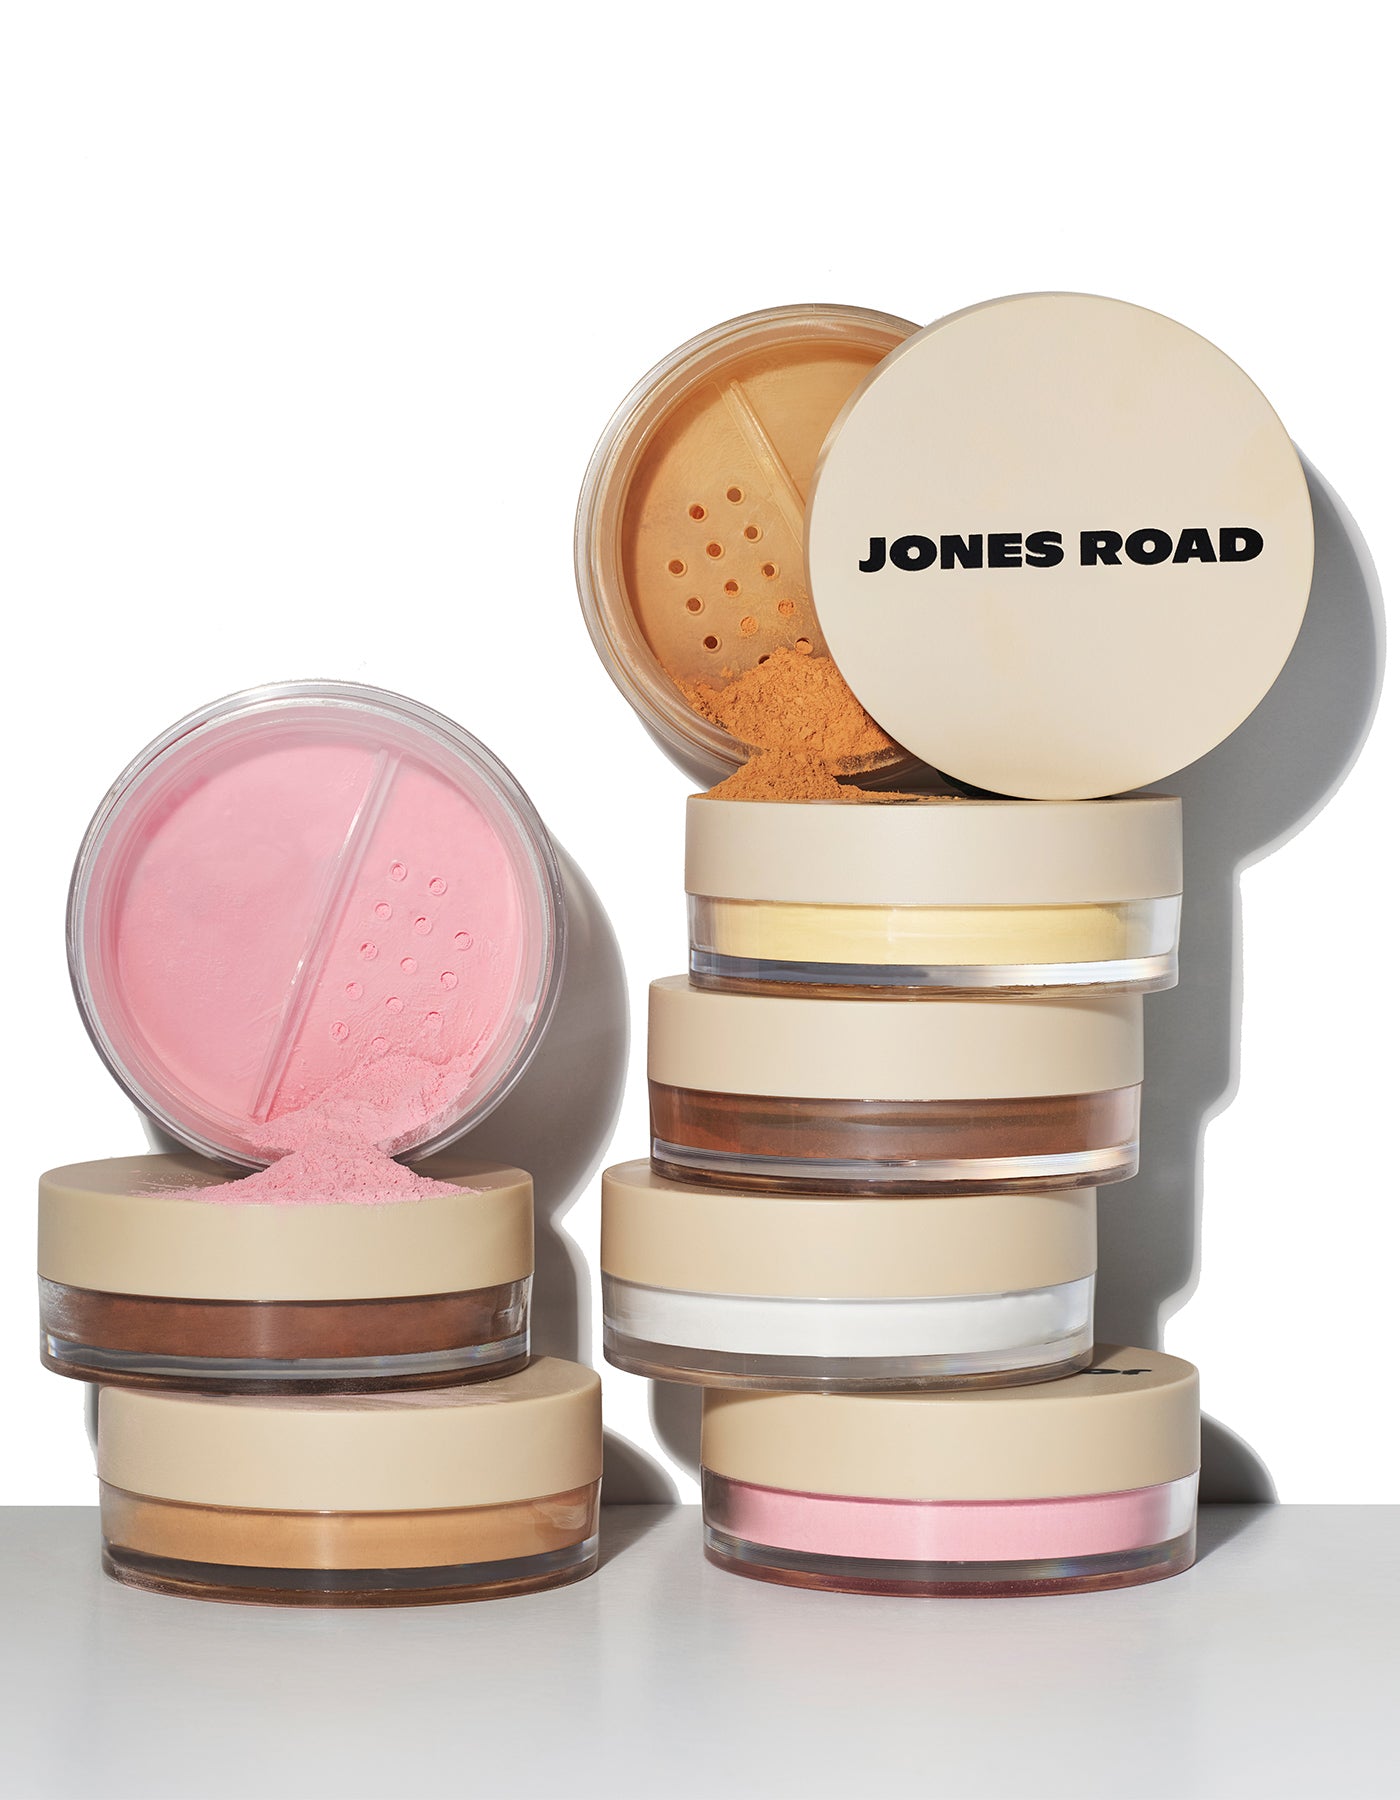 Jones Road Beauty Tinted Face Powder